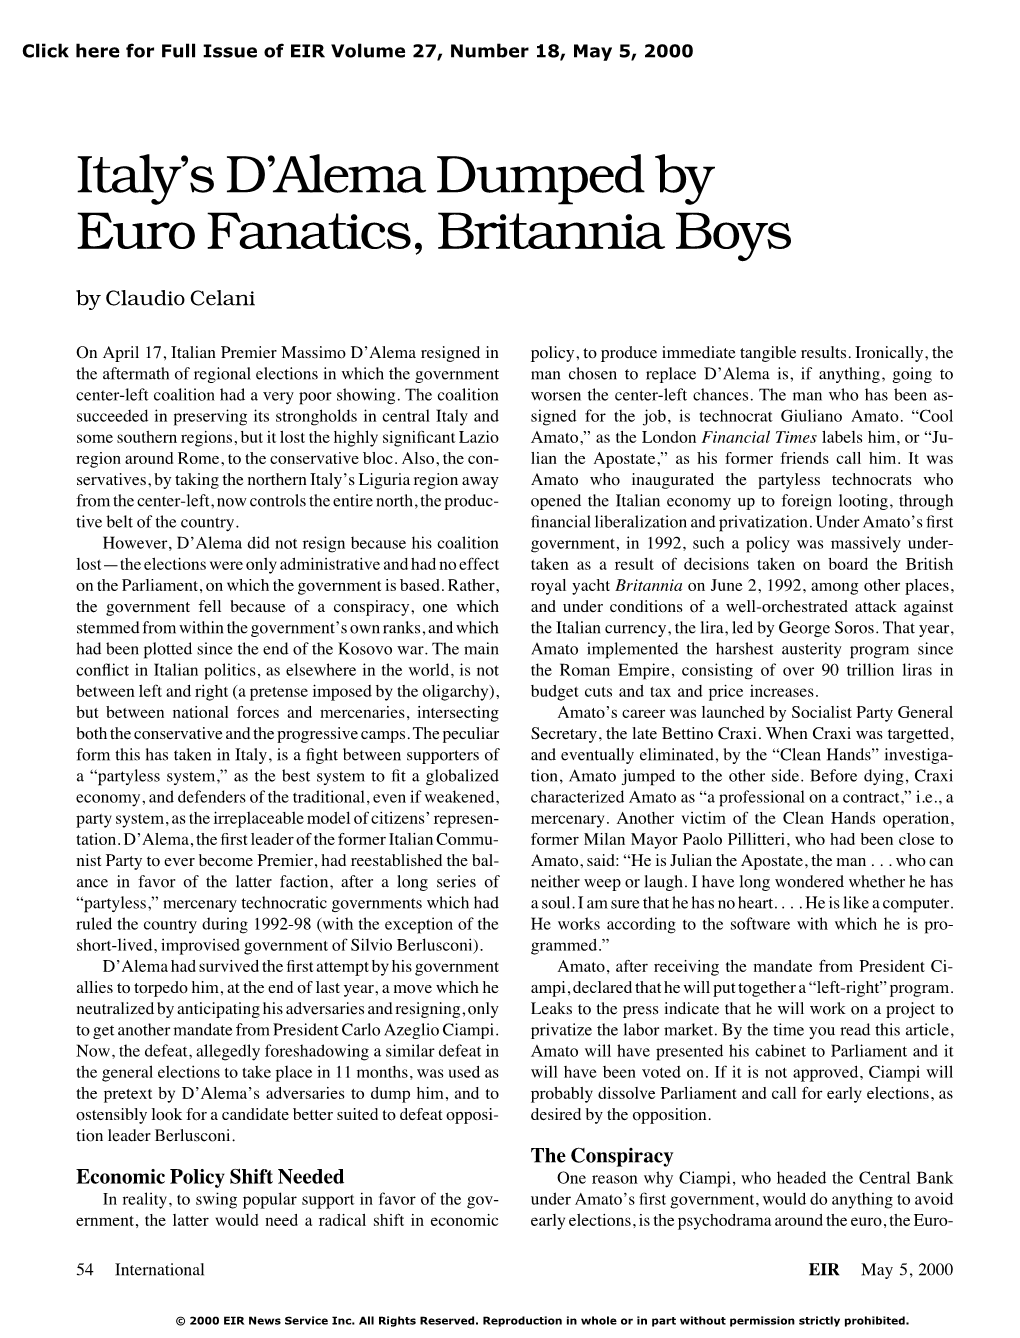 Italy's D'alema Dumped by Euro Fanatics, {Britannia} Boys